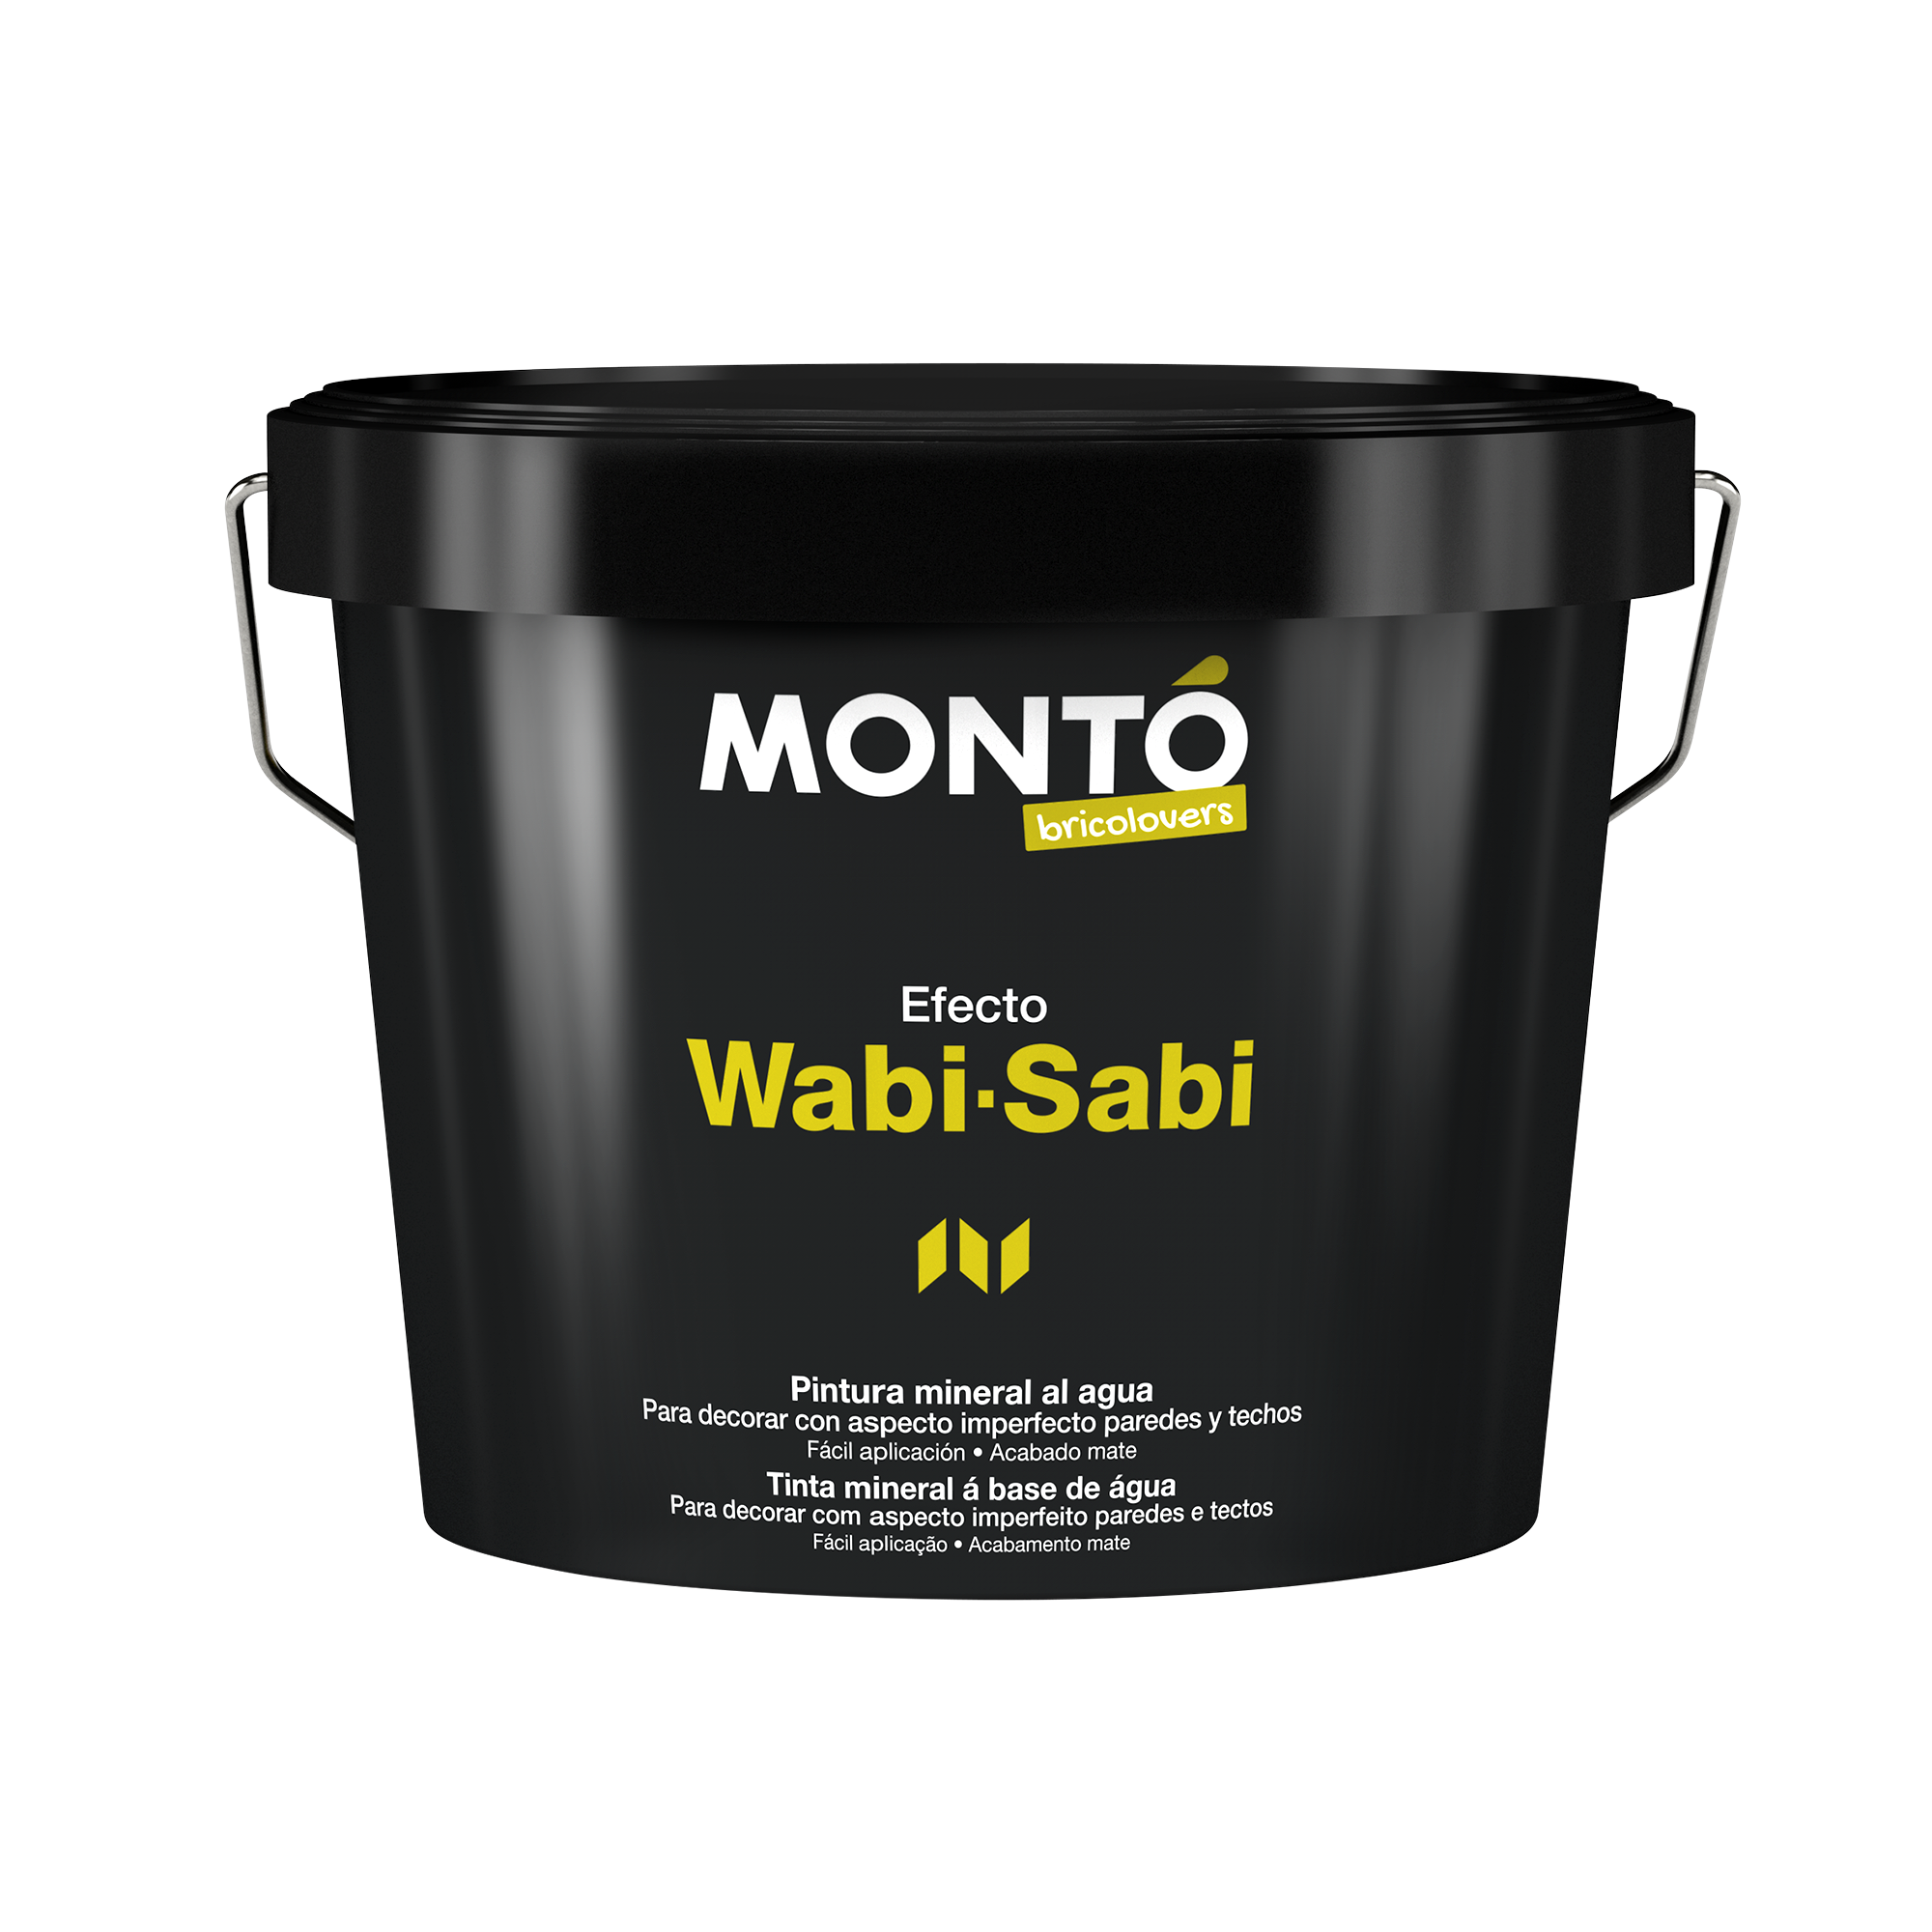 MONTO WABI-SABI